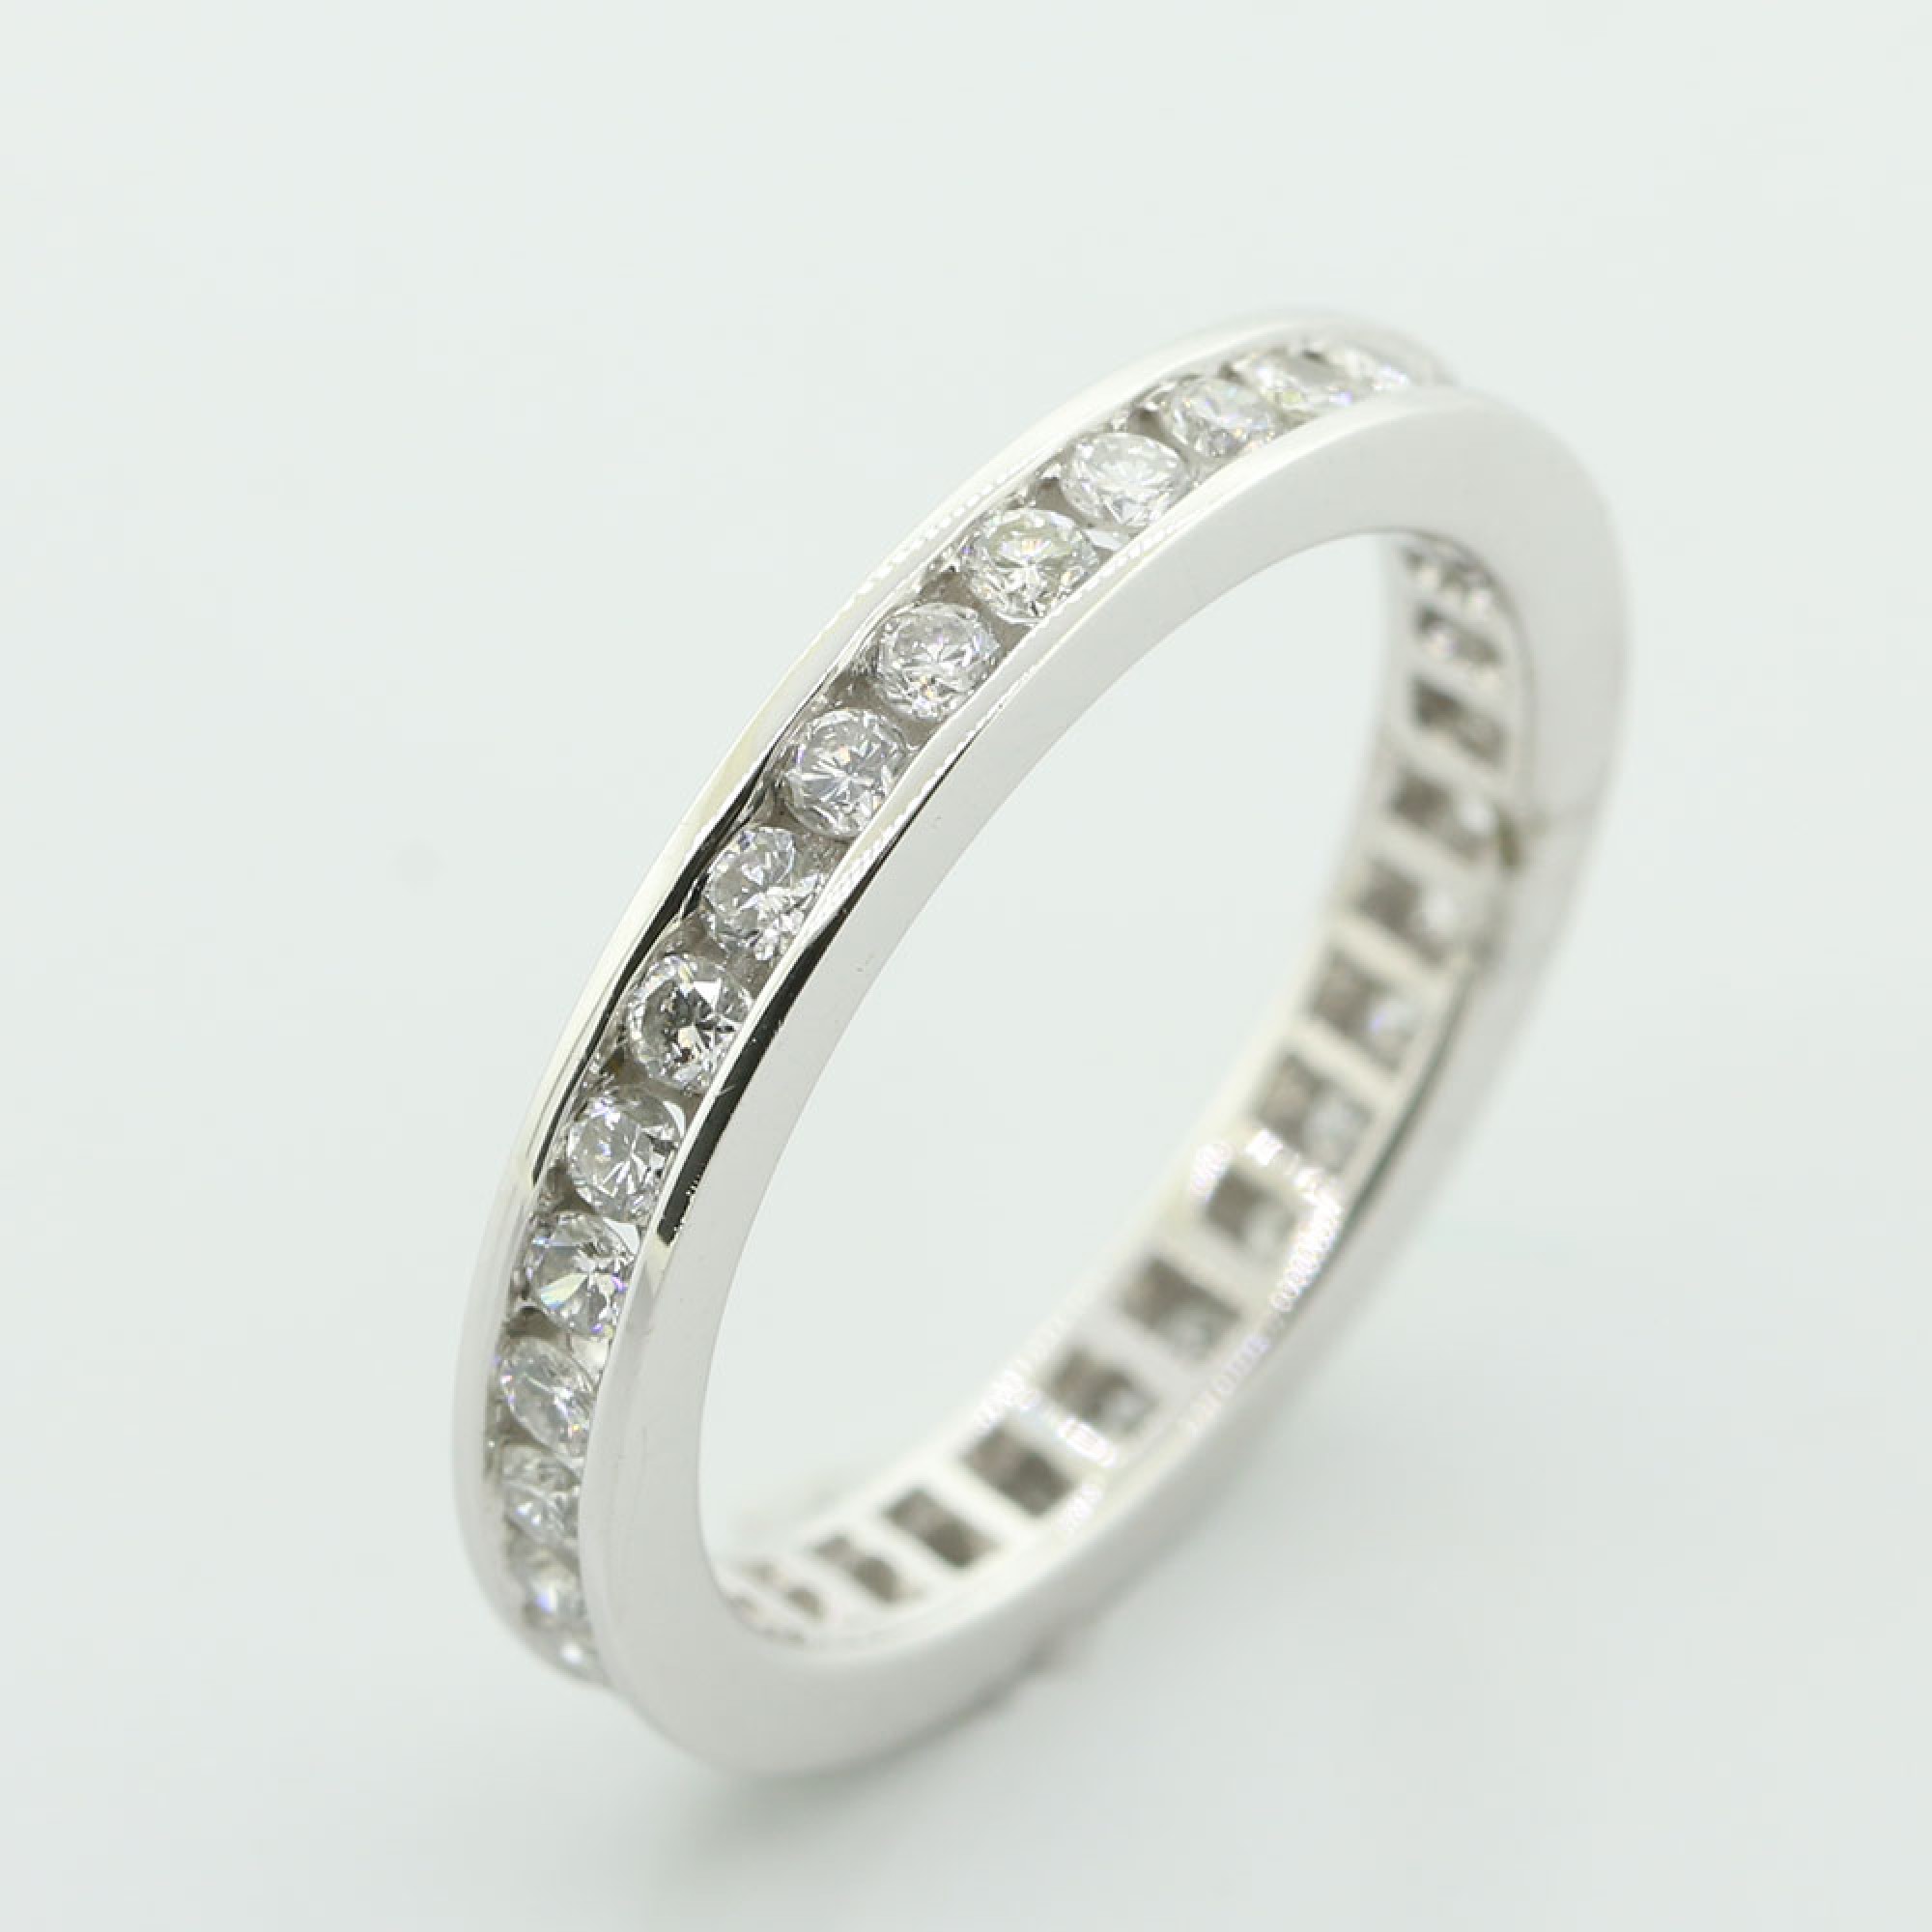 Et5140 Cheap Diamond Engagement Rings Buy Cheap Diamond Jewelry